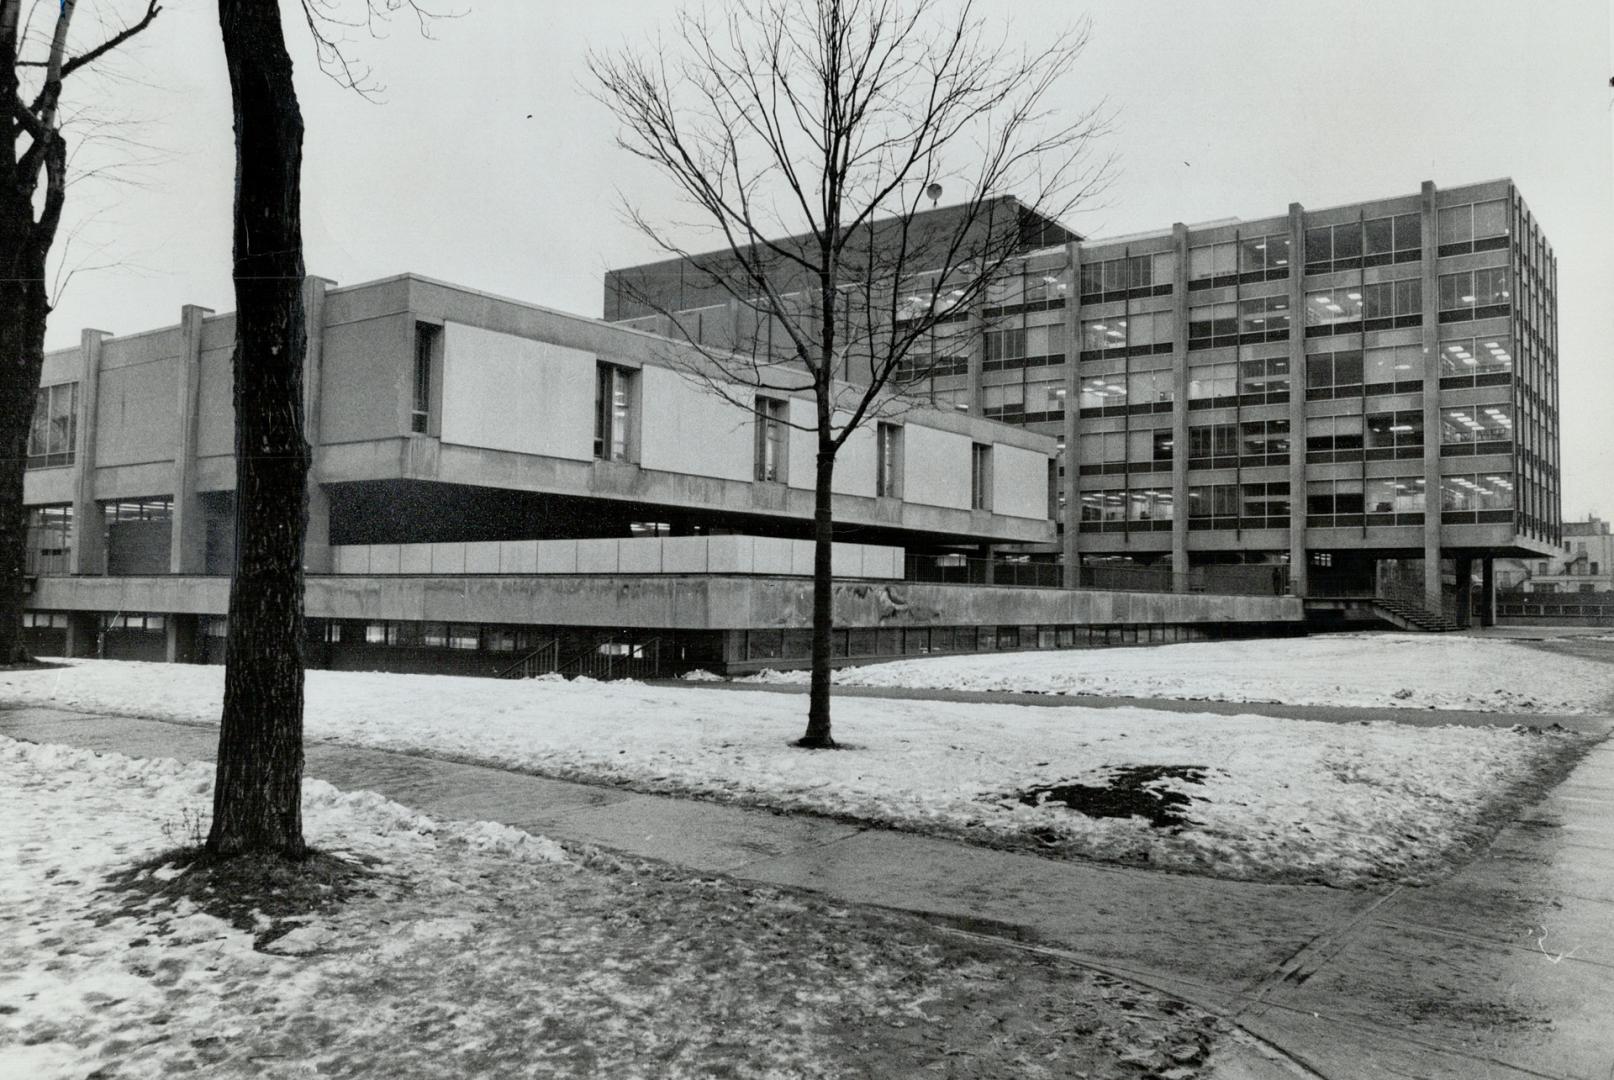 The university of Toronto's new sidney smith hall on St